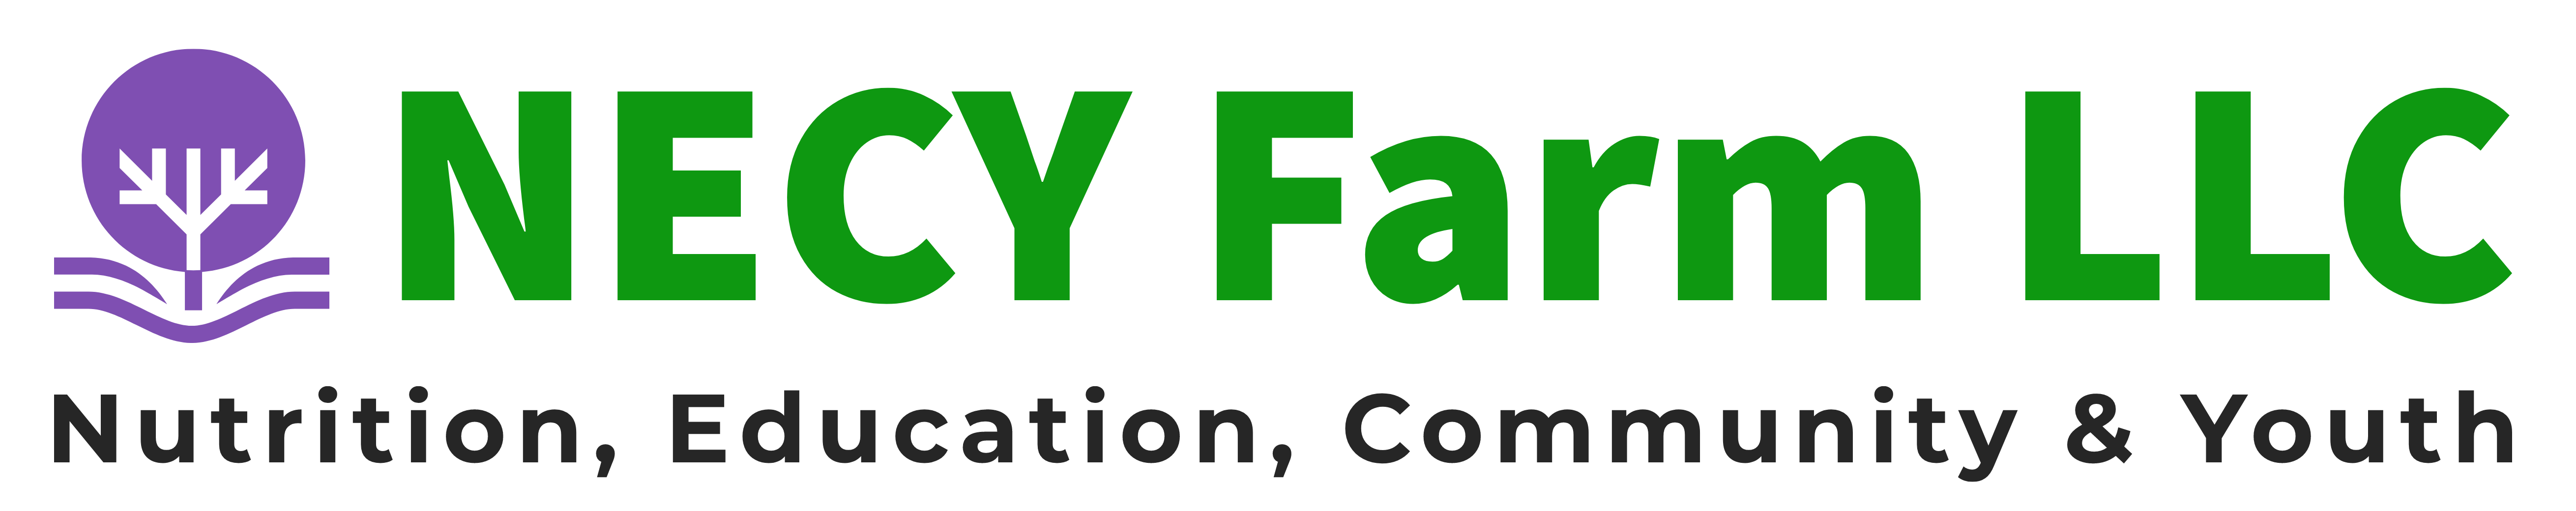 NECY Farm ~ Nutrition, Education, Community & Youth!